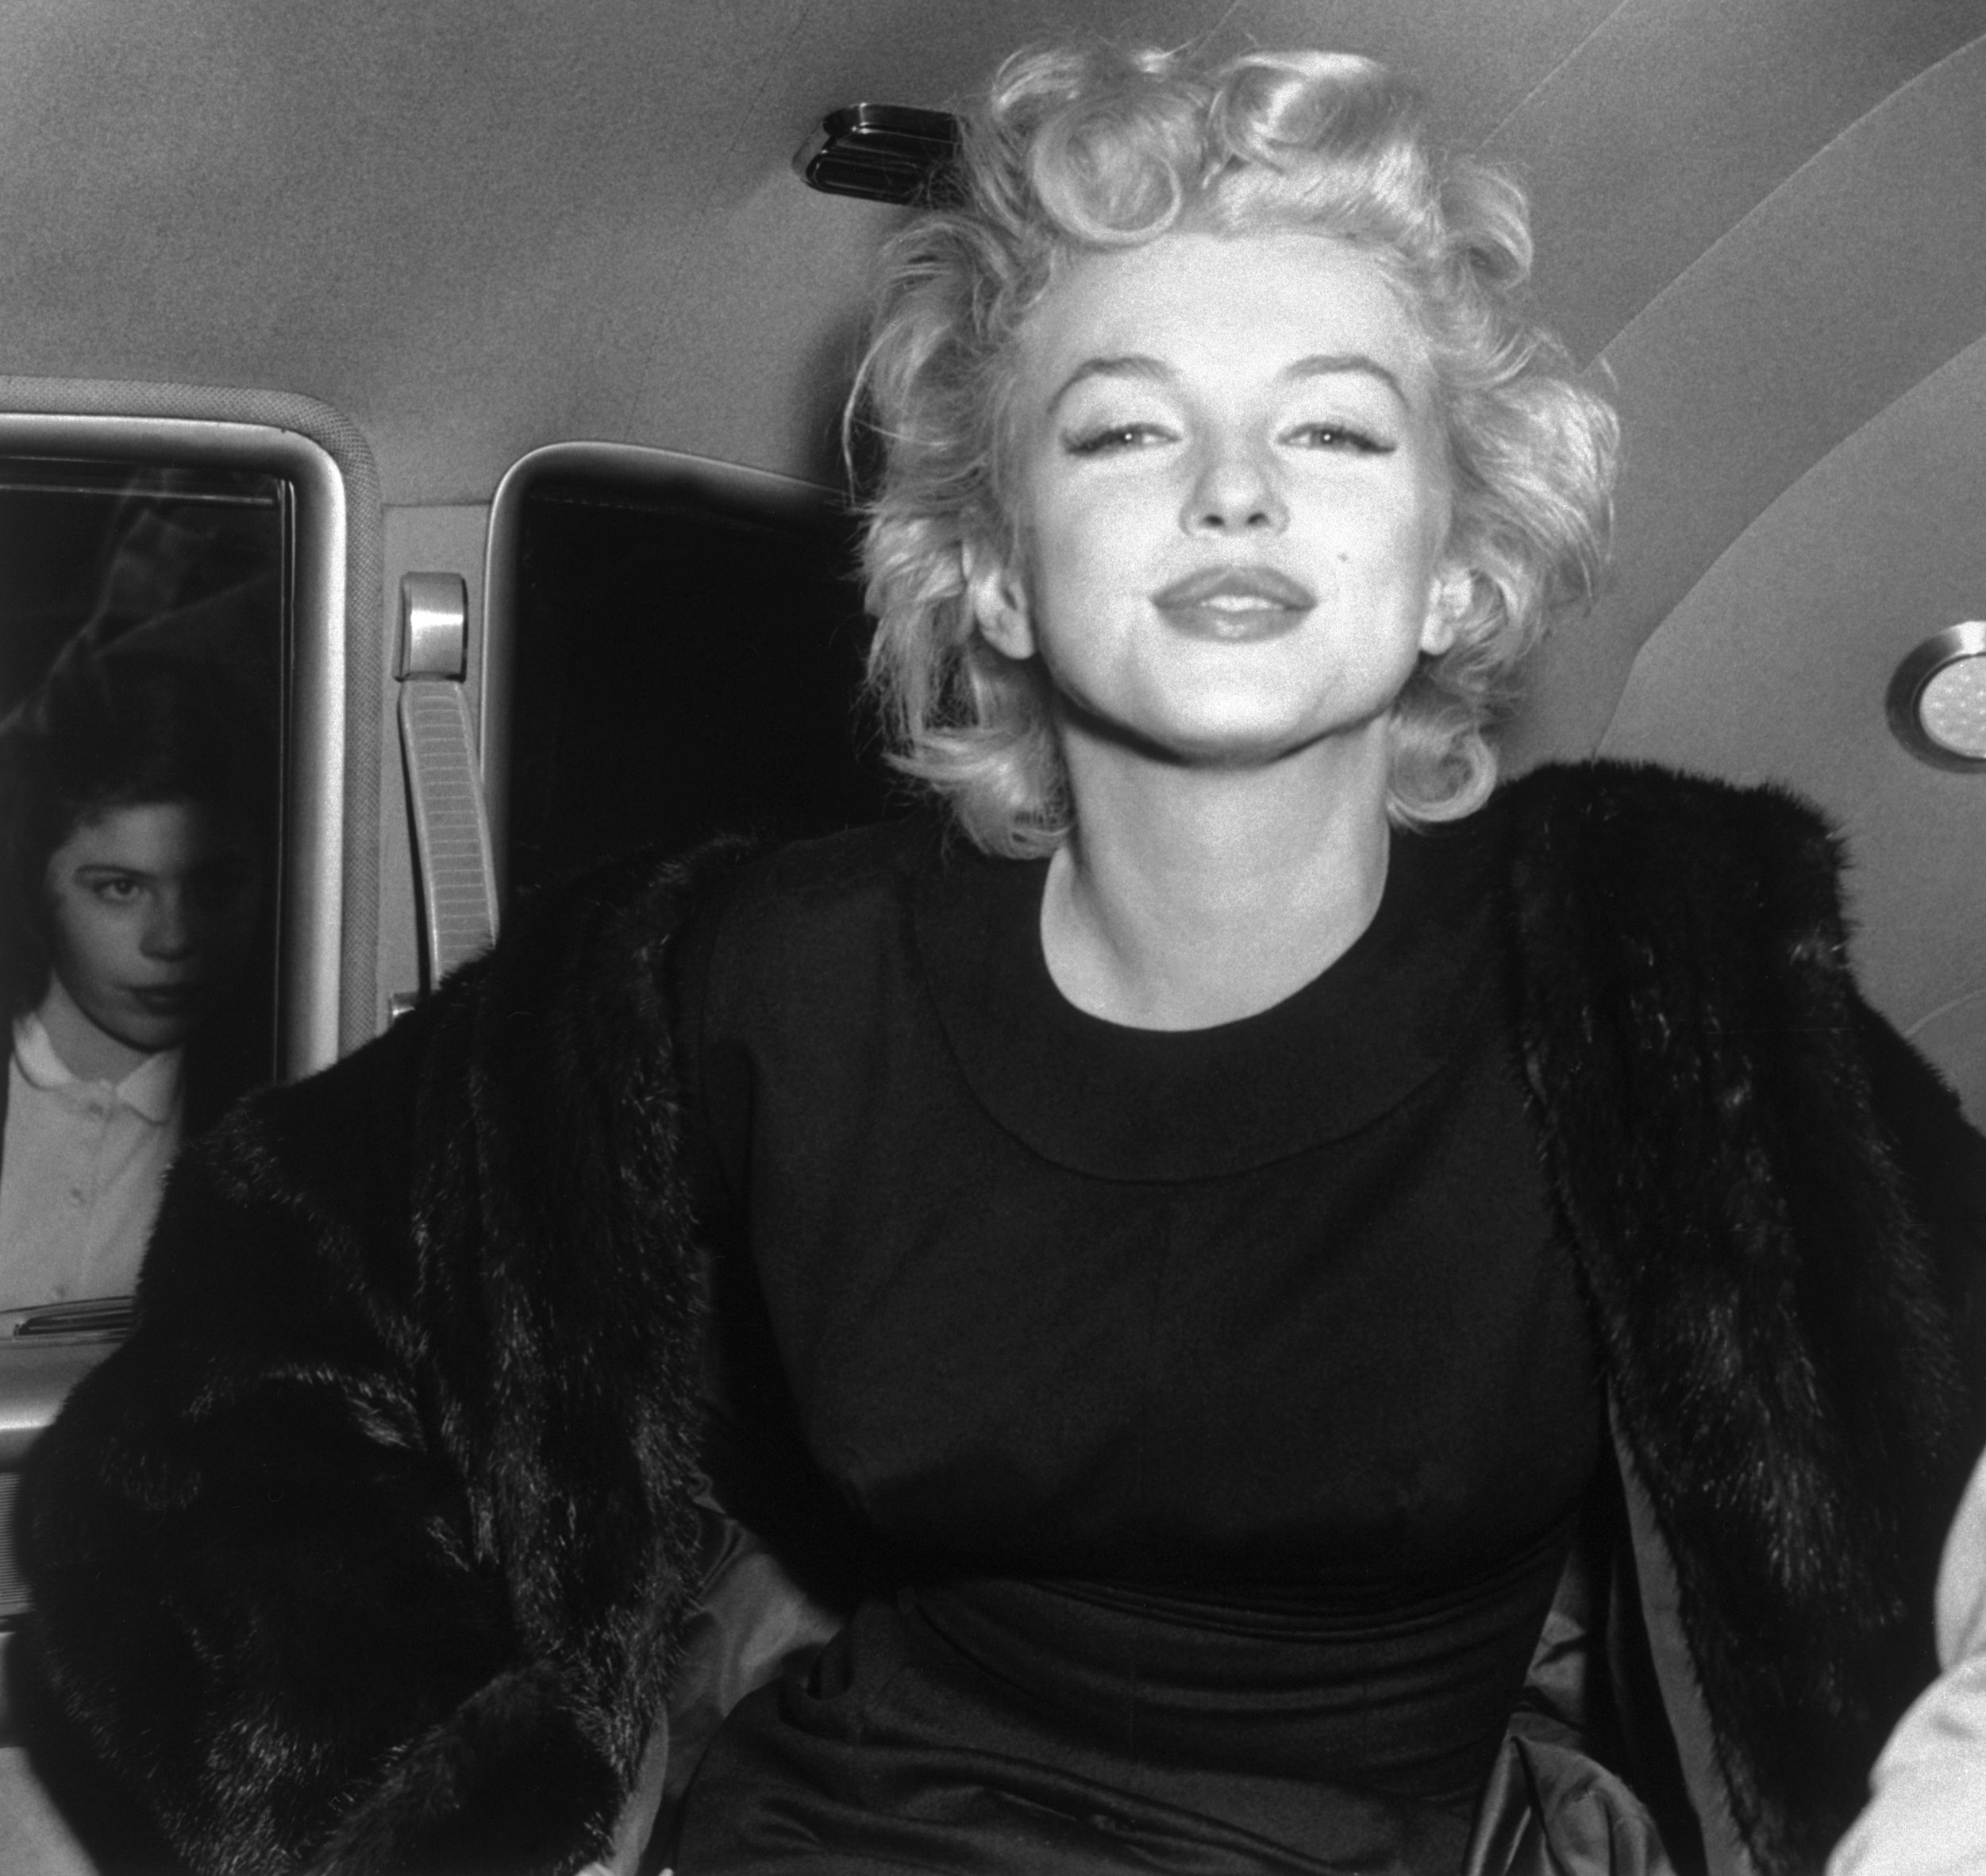 Closeup of Marilyn Monroe